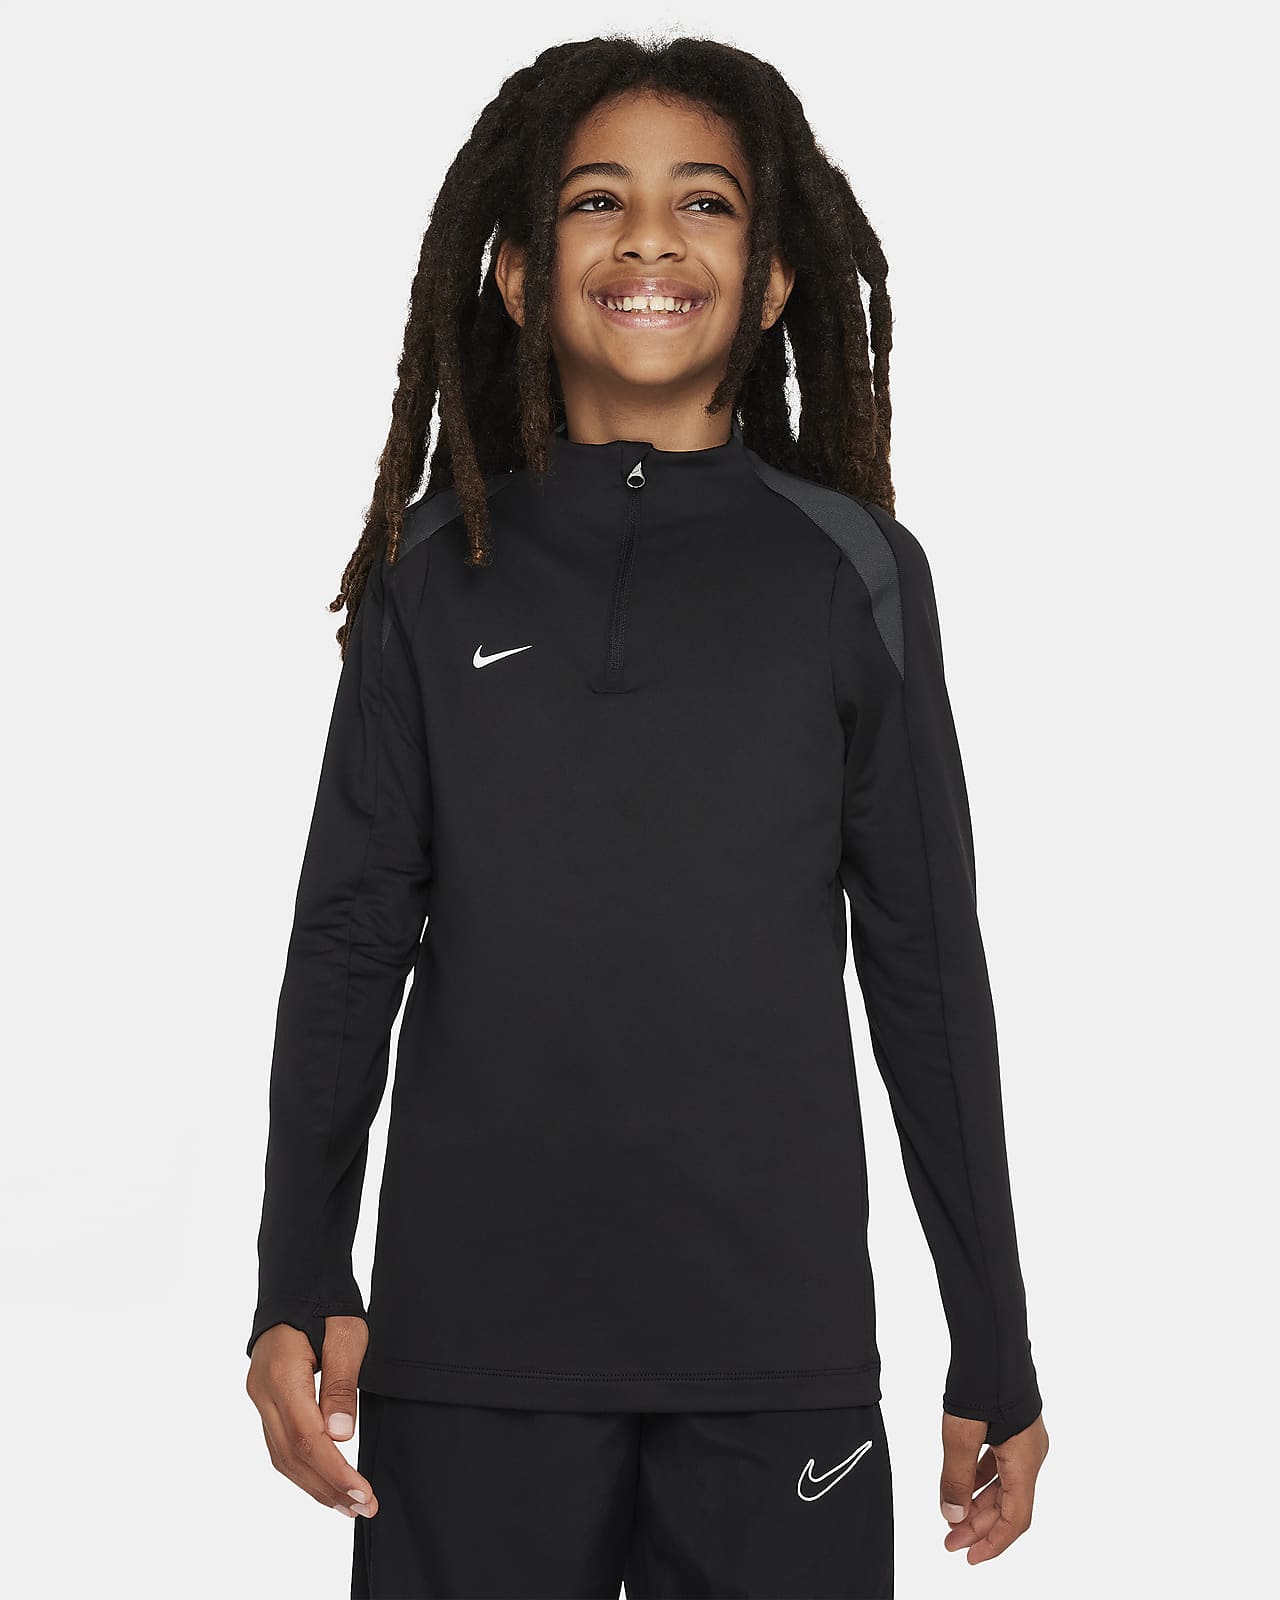 Nike Dri-FIT Strike futball-melegítőfelső nagyobb gyerekeknek